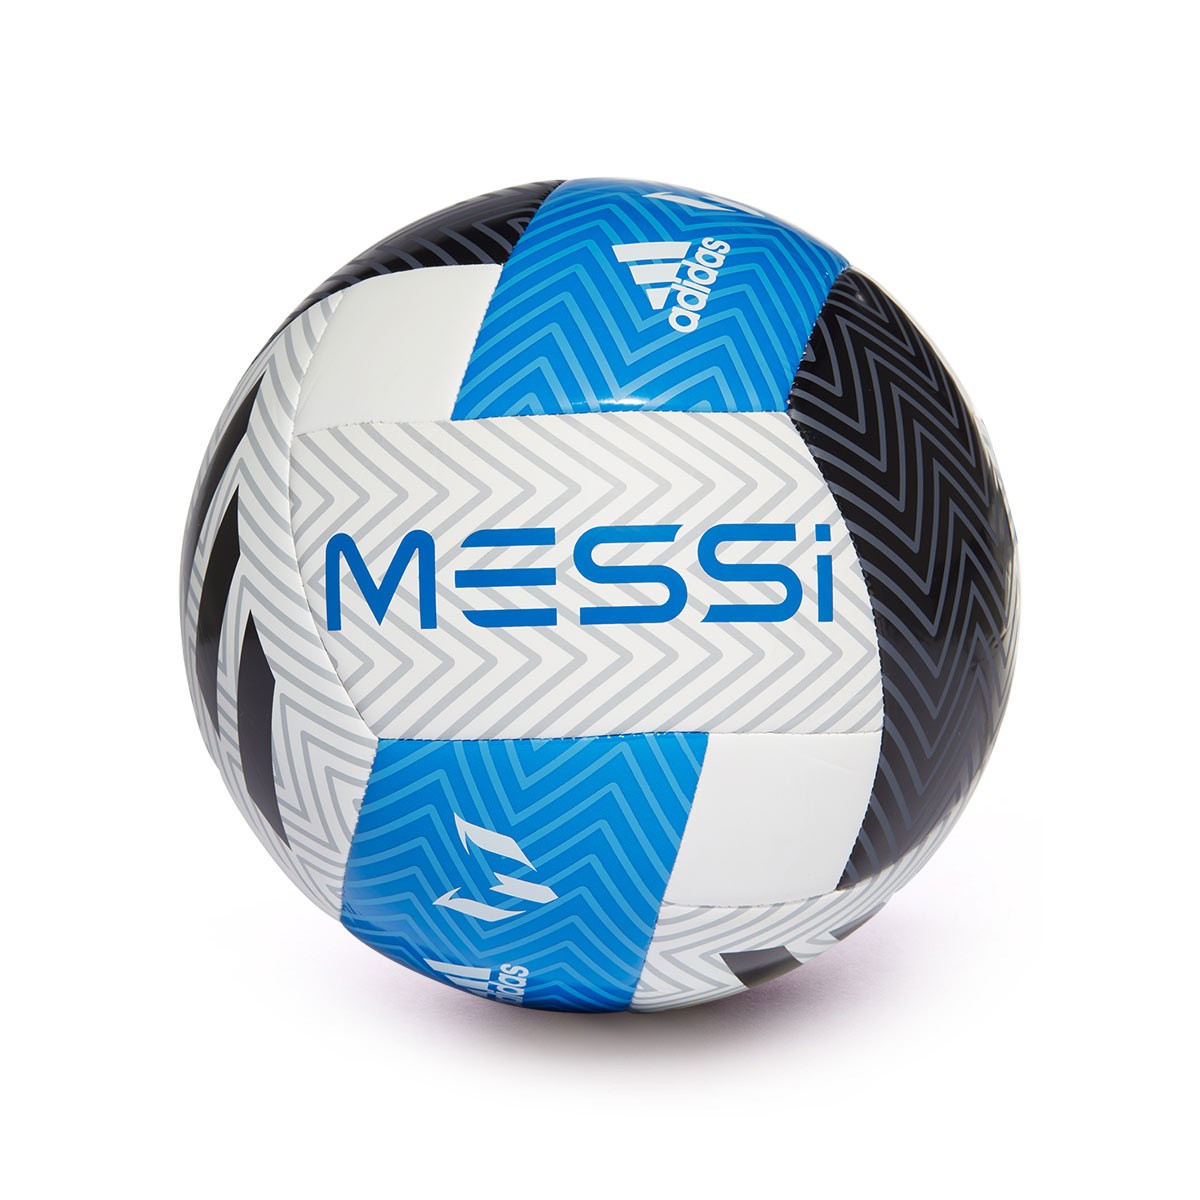 Ball adidas Messi Football blue-Black-White - Football store Fútbol Emotion